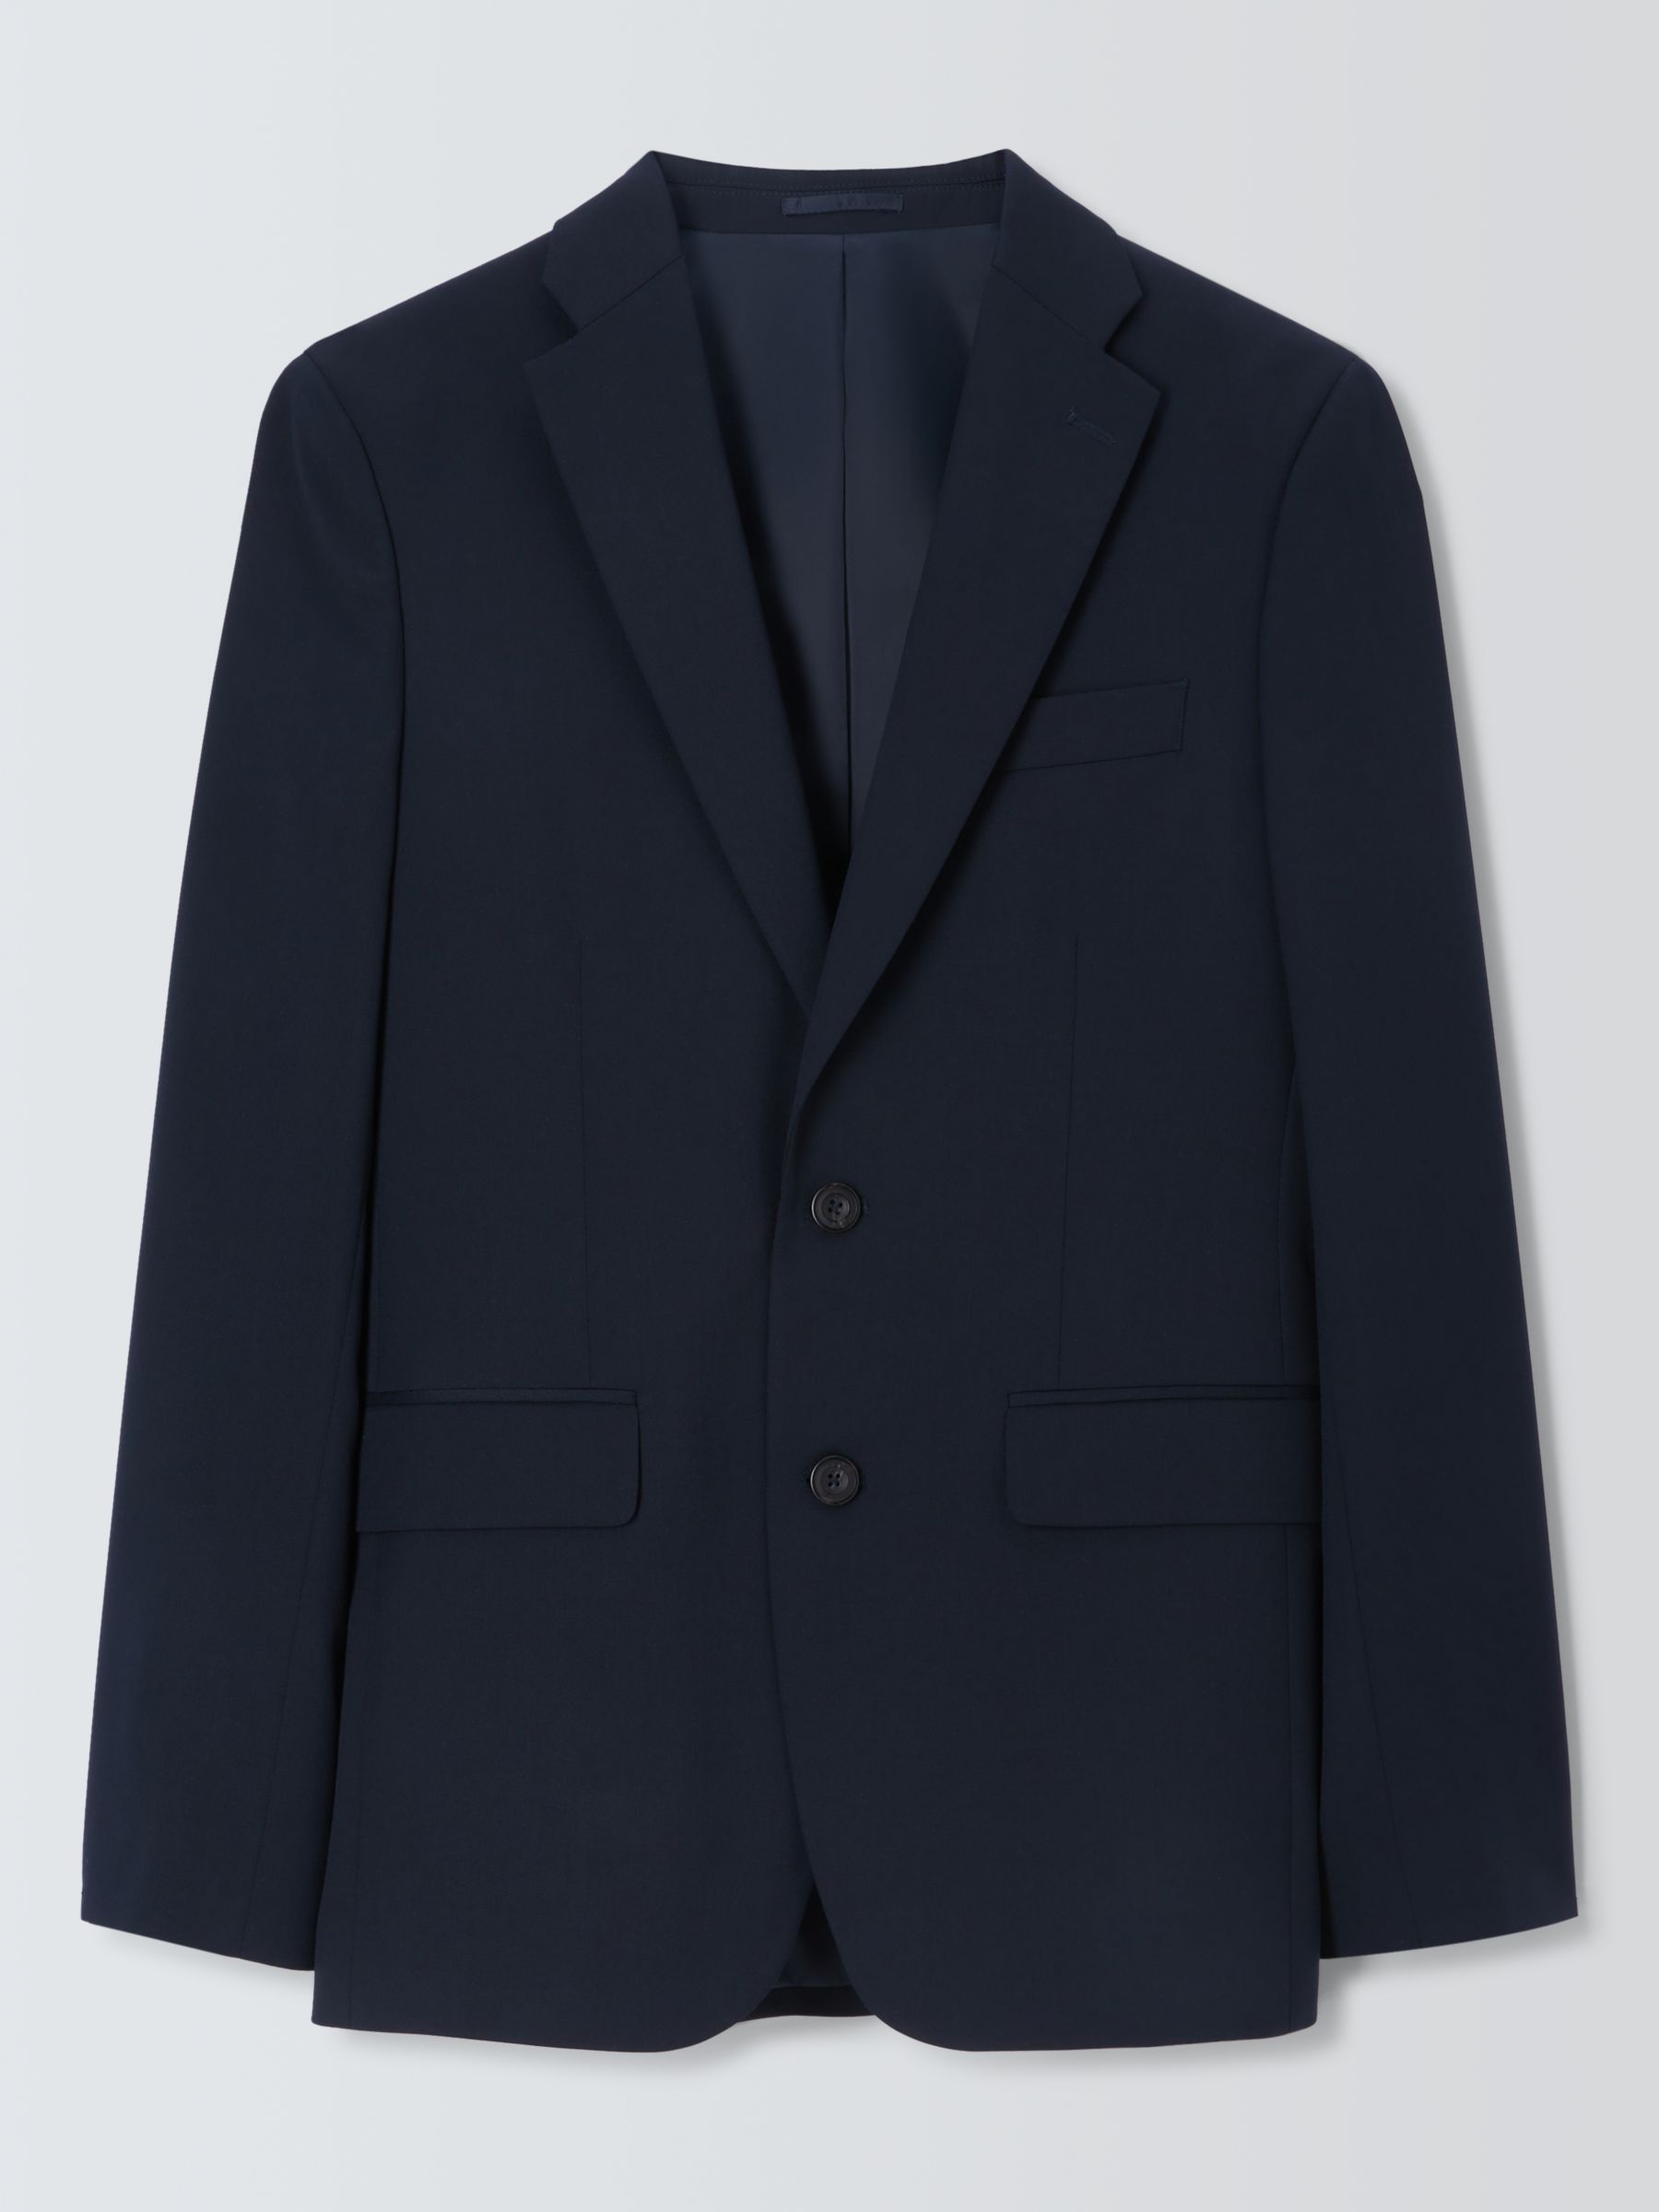 John Lewis Washable Wool Blend Regular Fit Suit Jacket, Navy, 36R